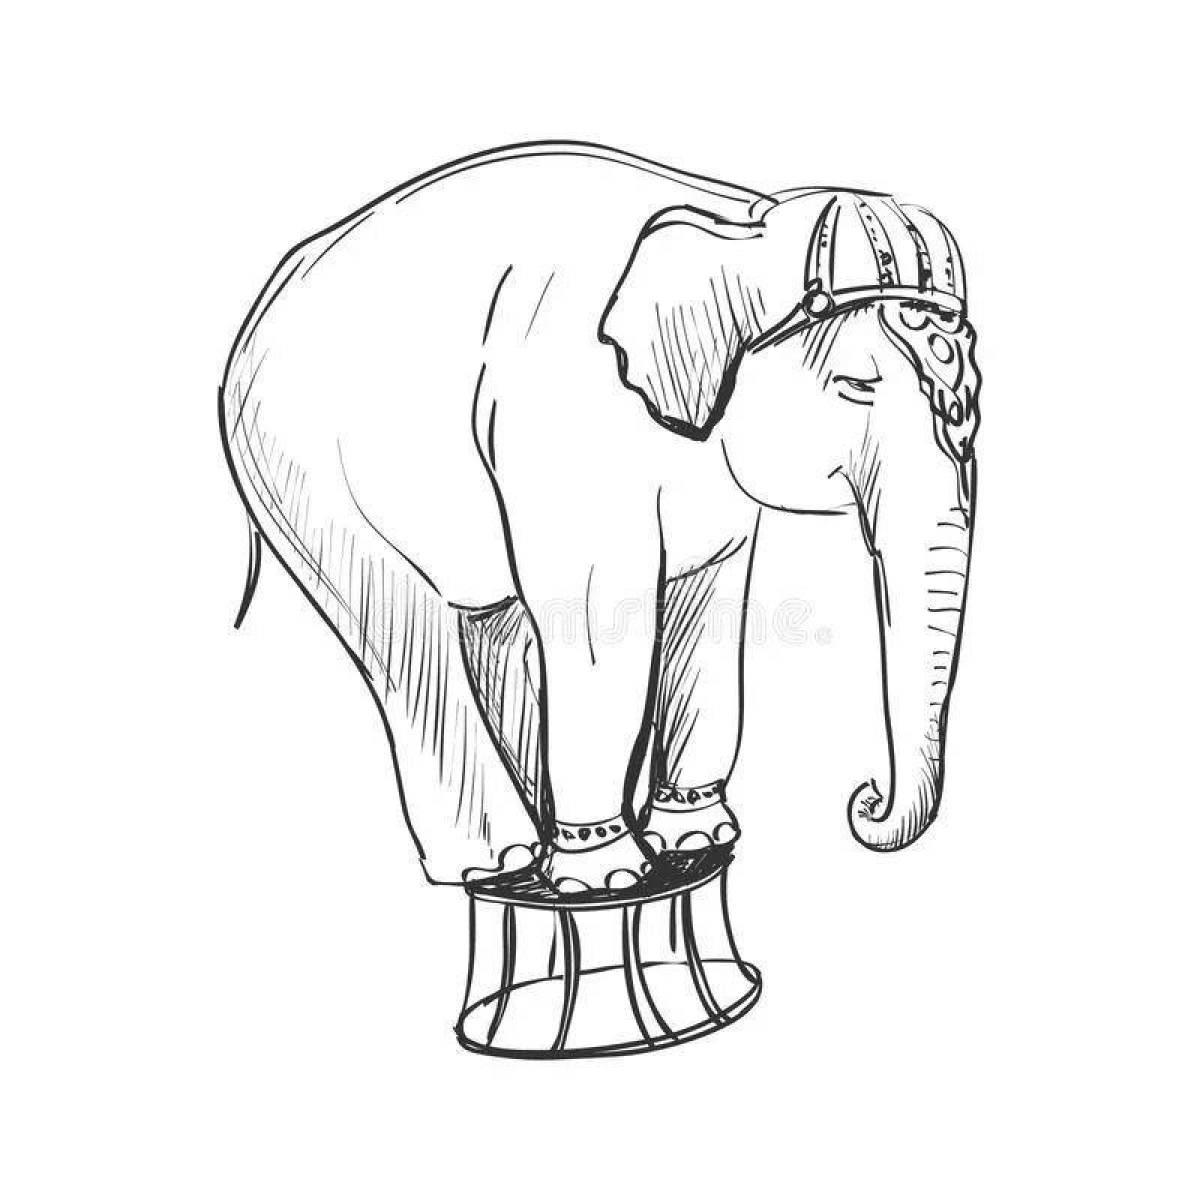 Elephant radiant kuprin grade 3